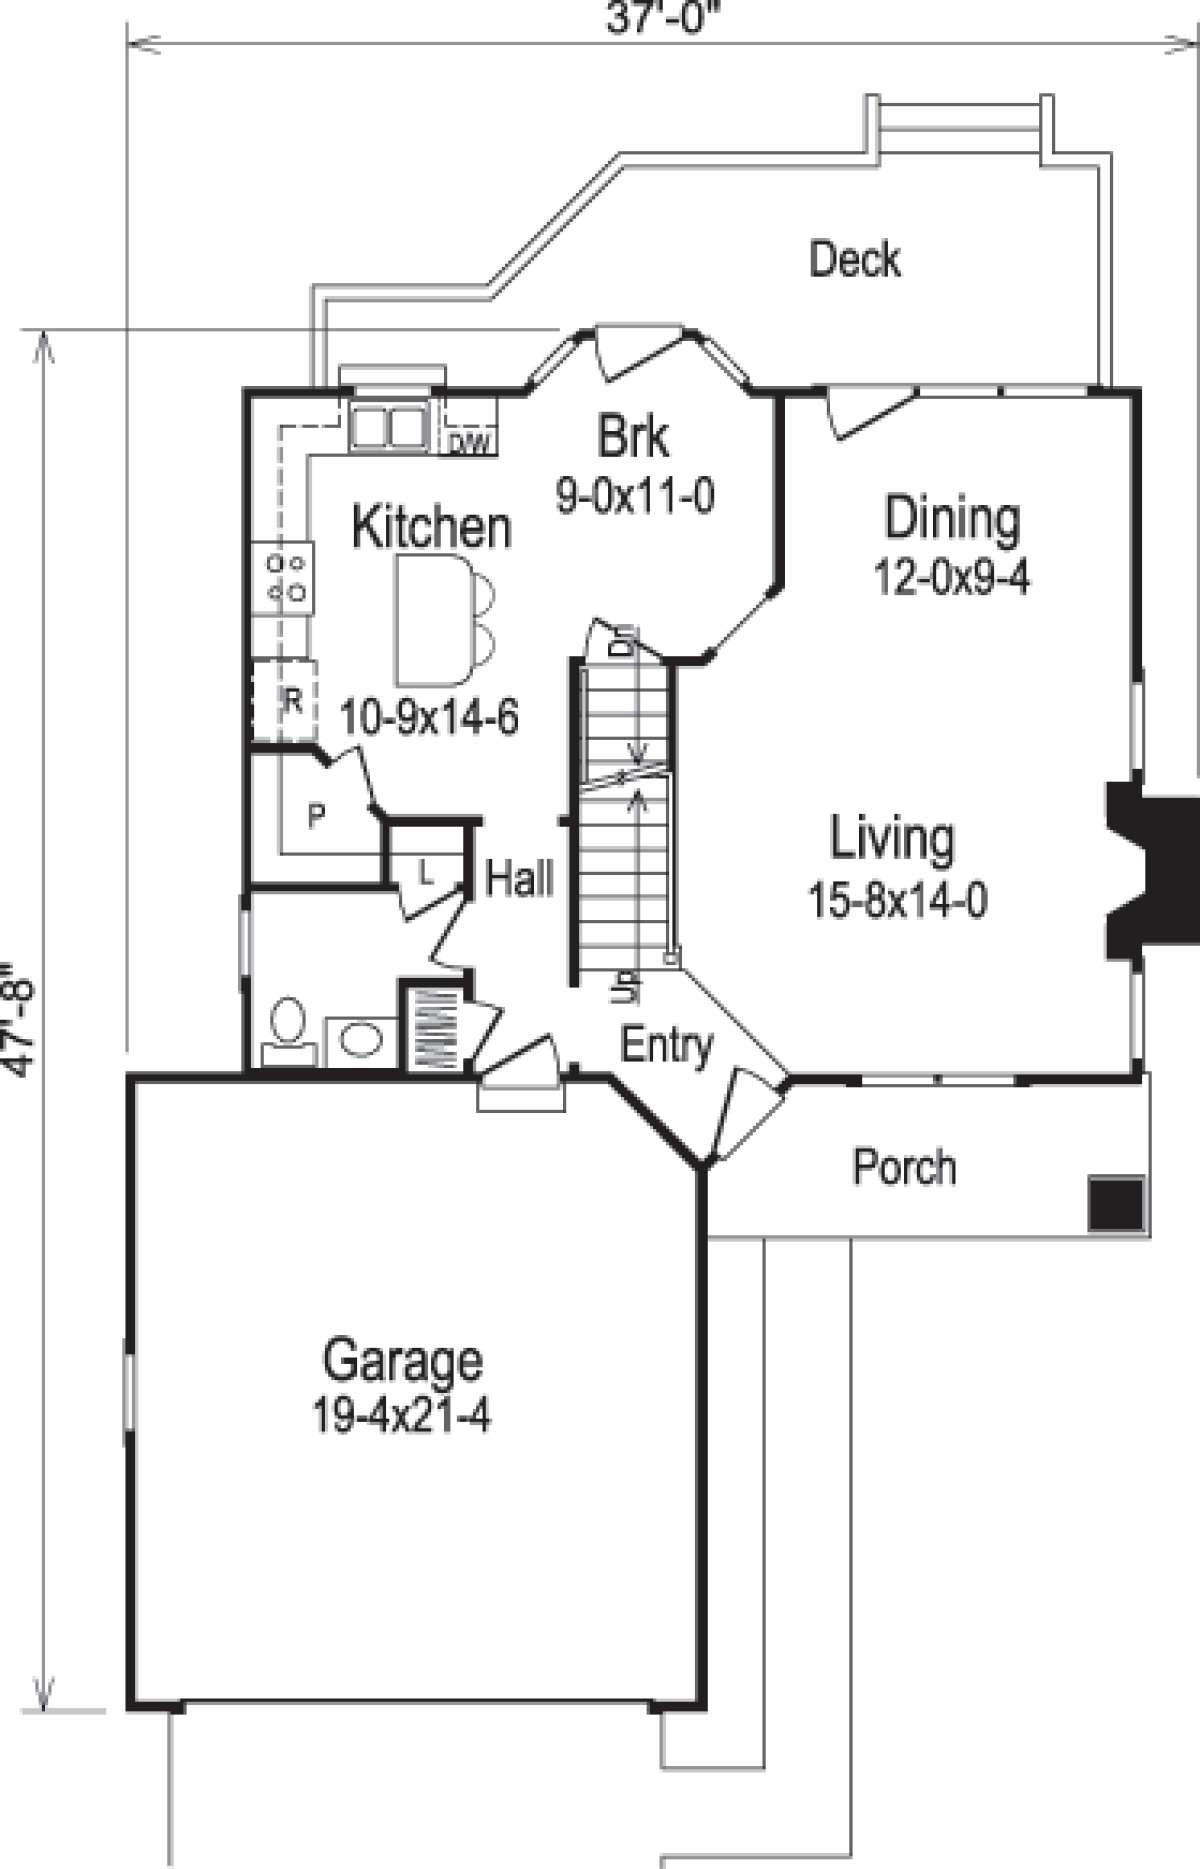 Cabin Plan: 1,492 Square Feet, 3 Bedrooms, 2.5 Bathrooms ...